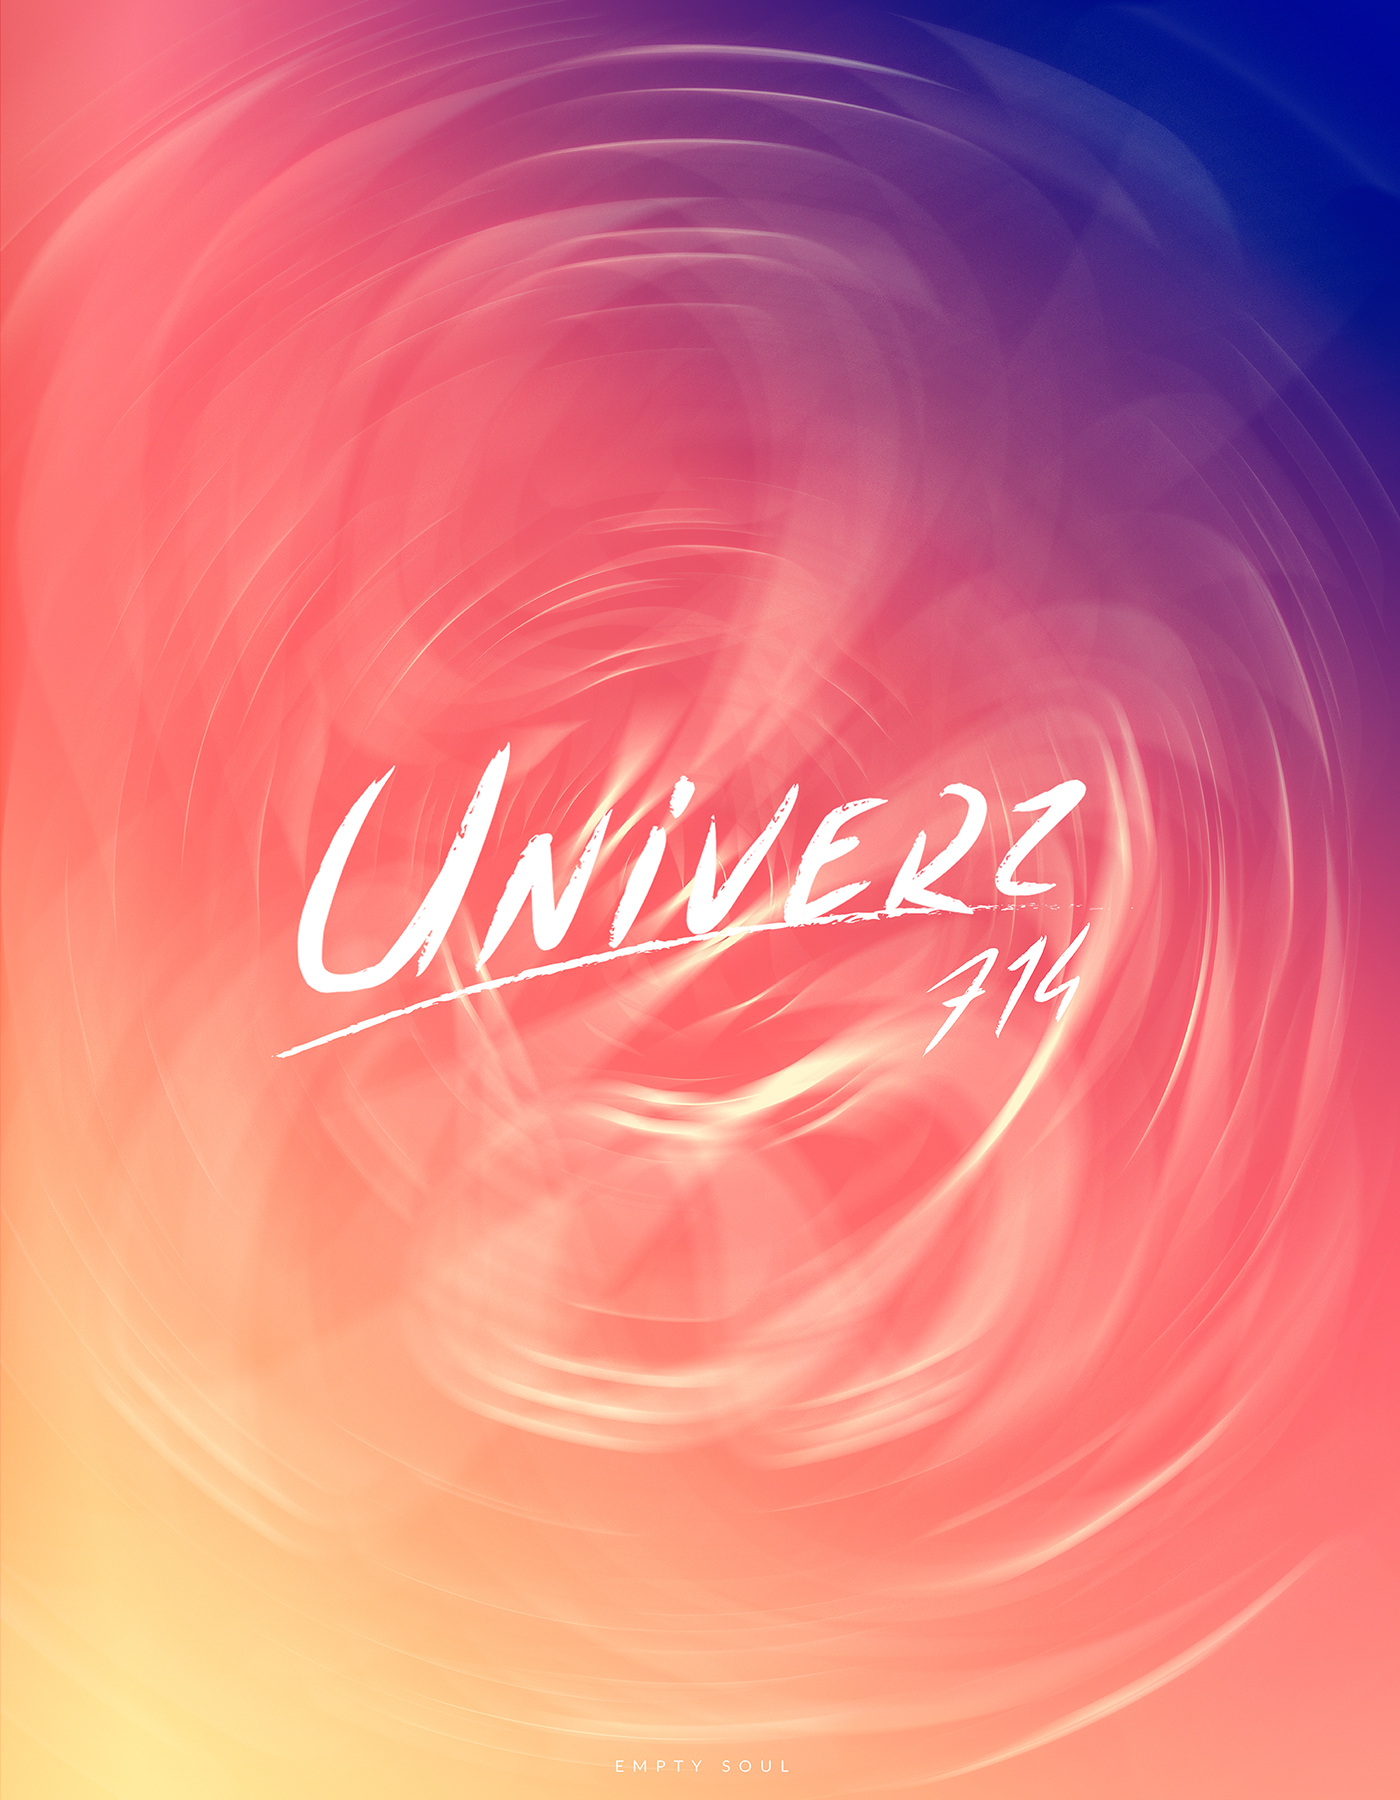 abstract digital art Illustrator vector future soul ideas dreams colors universe Space  dreamer inspiration Love